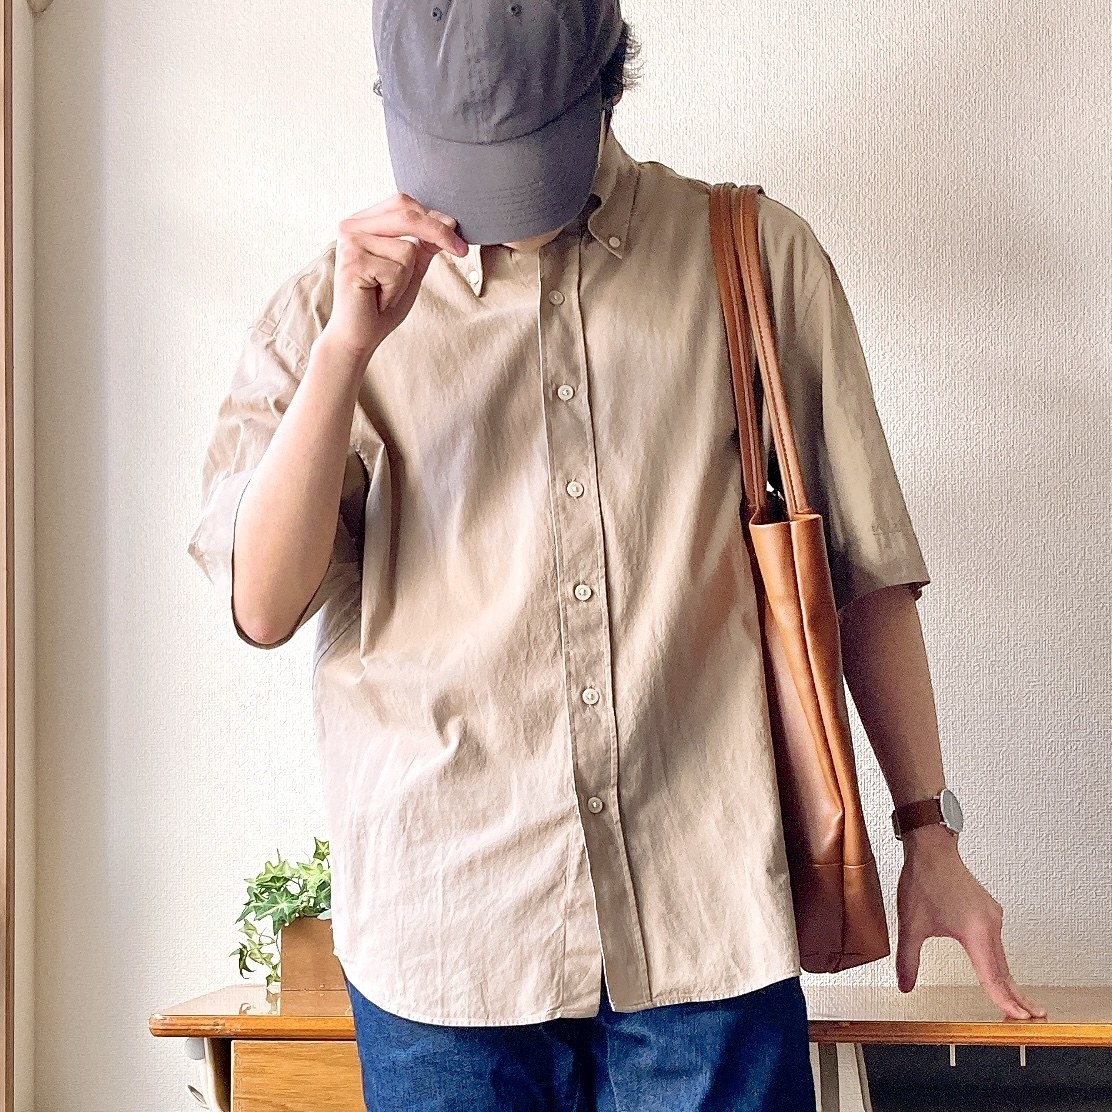 UNIQLO（ユニクロ）のおすすめメンズアイテム「オーバーサイズシャツ（半袖）」